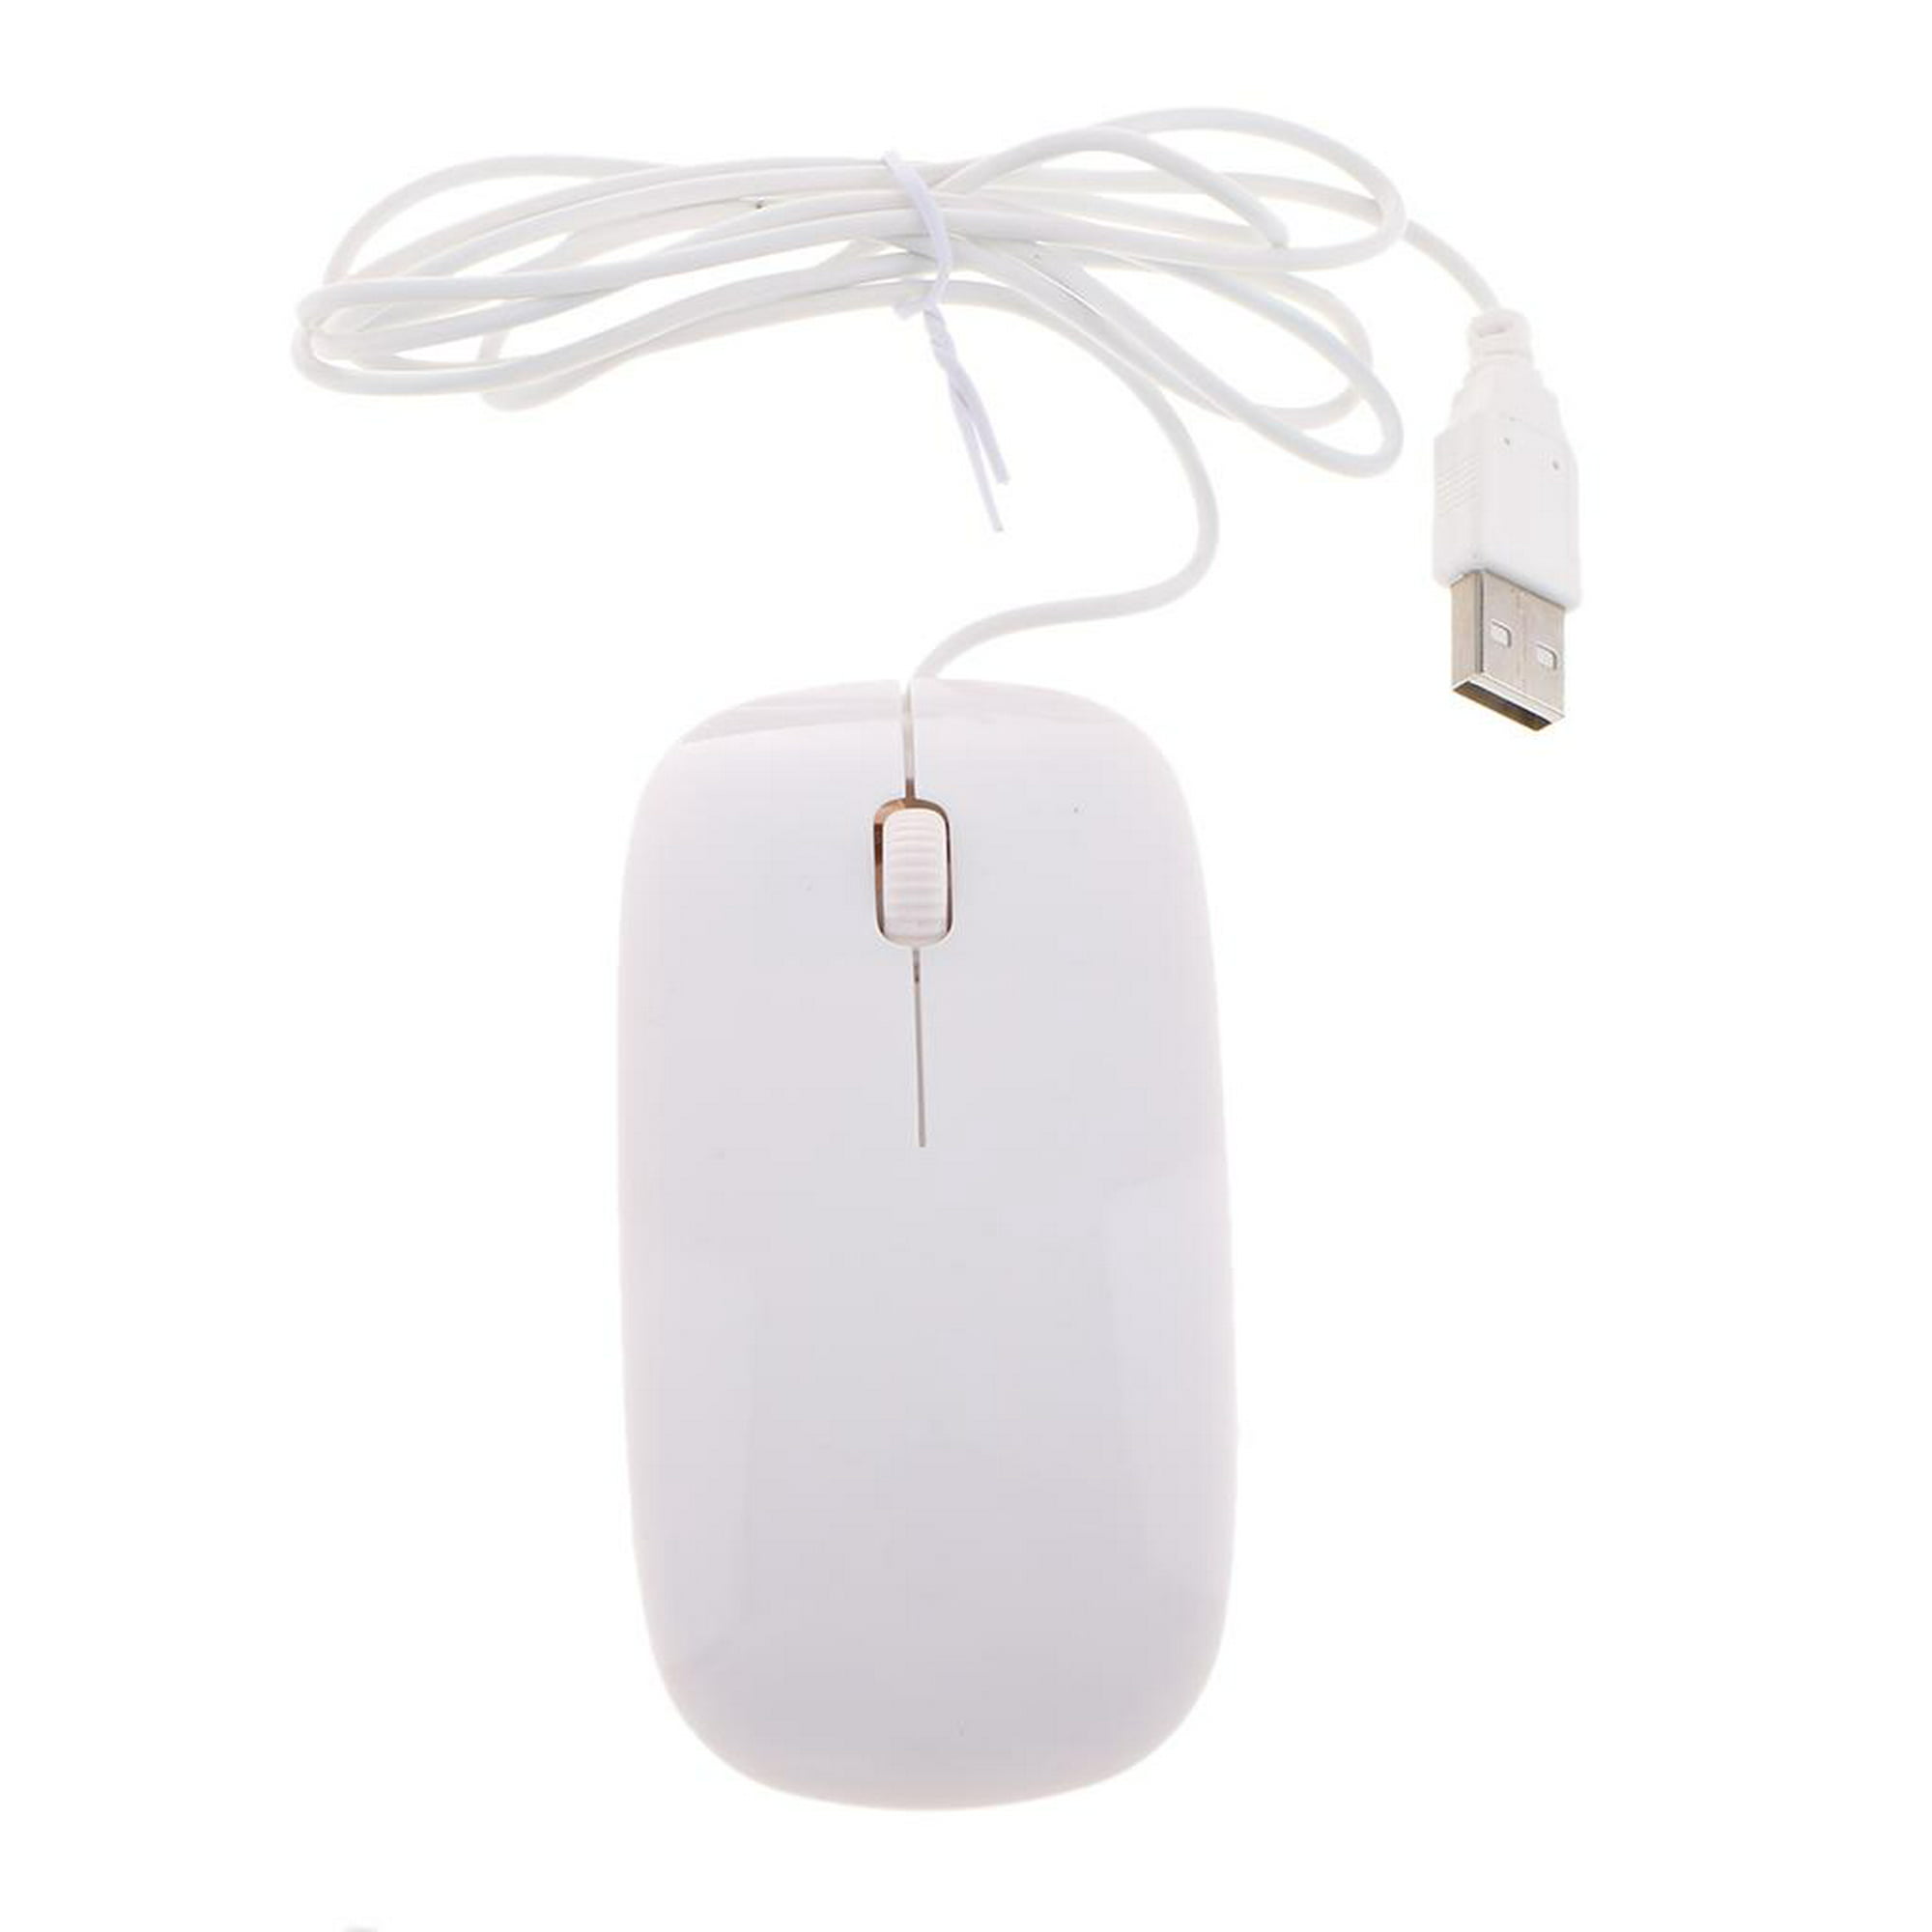  IULONEE Ratón tipo C, ratones USB C con cable, mouse